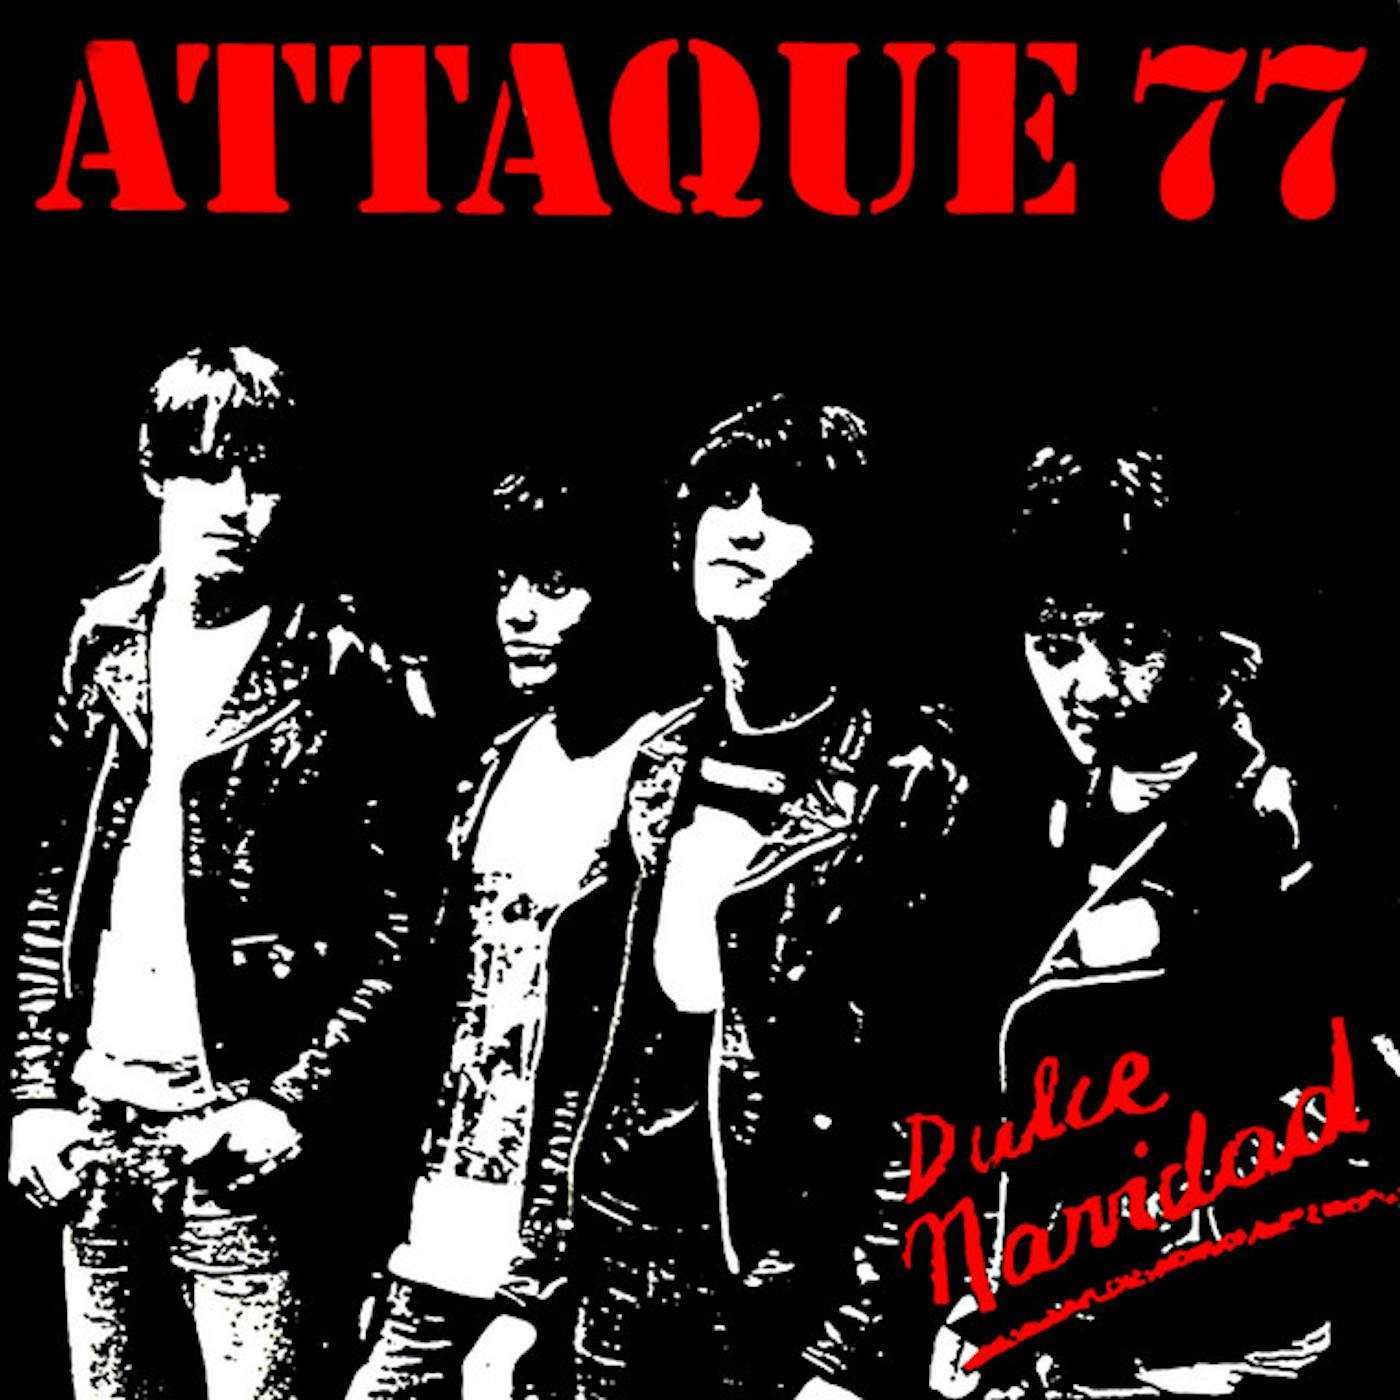 Attaque 77 DULCE NAVIDAD CD